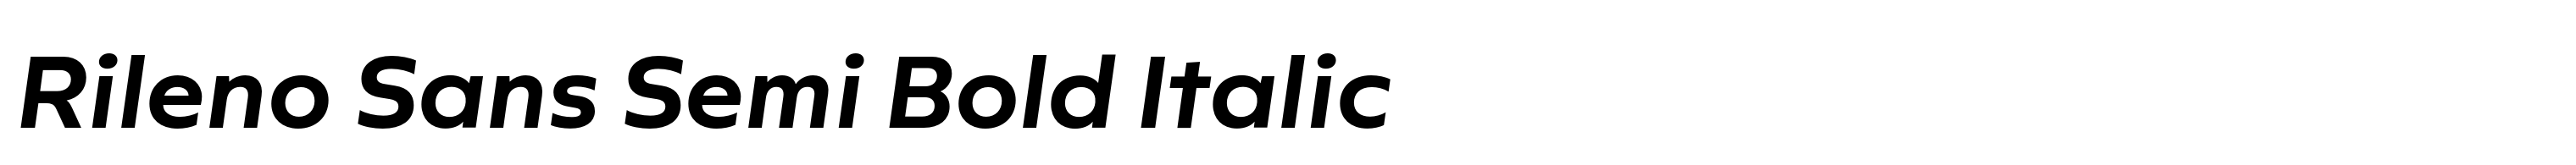 Rileno Sans Semi Bold Italic